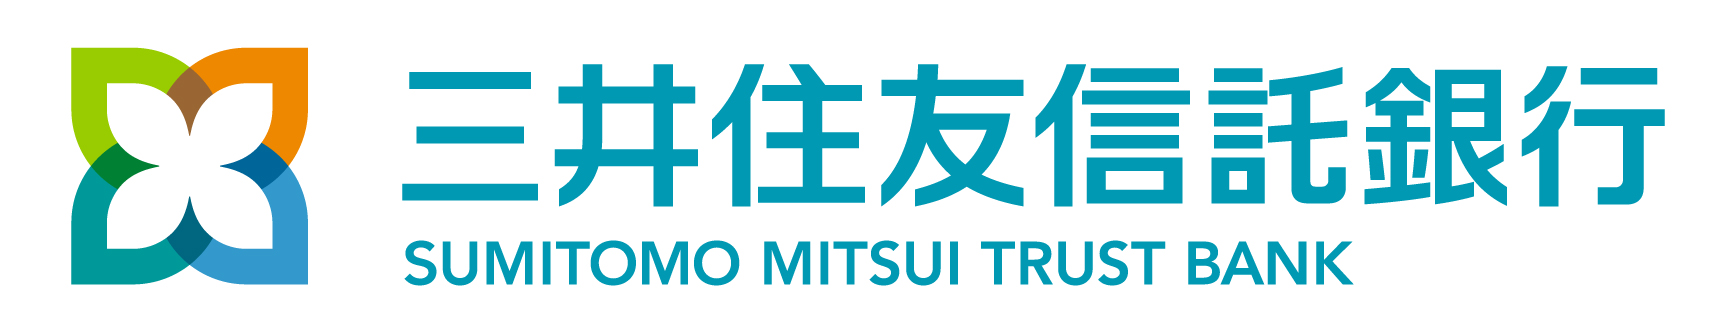 Sumitomo Mitsui Trust Bank (SMTB)